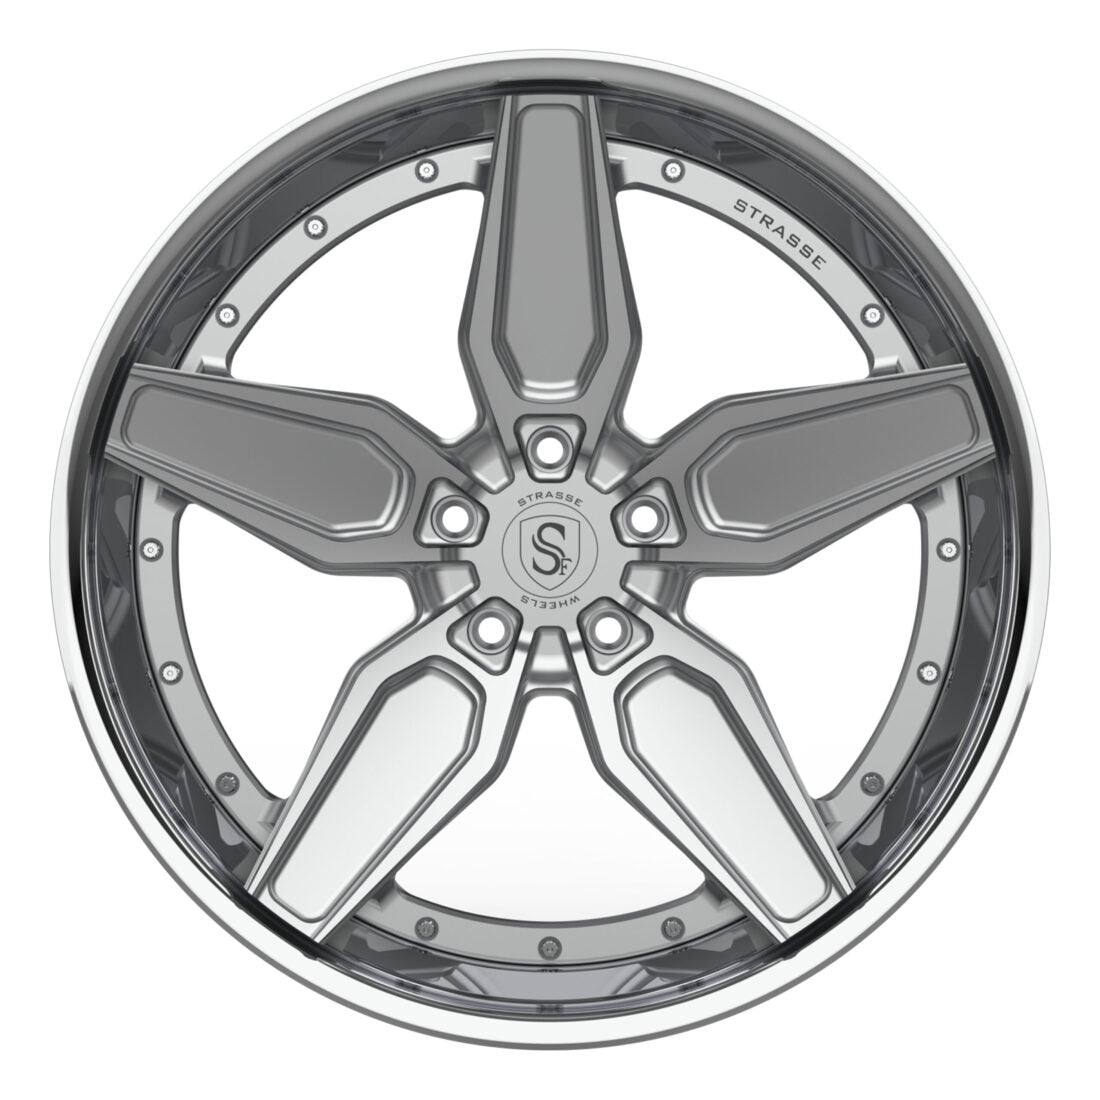 STRASSE SV4S DEEP CONCAVE FS - Wheel Designers